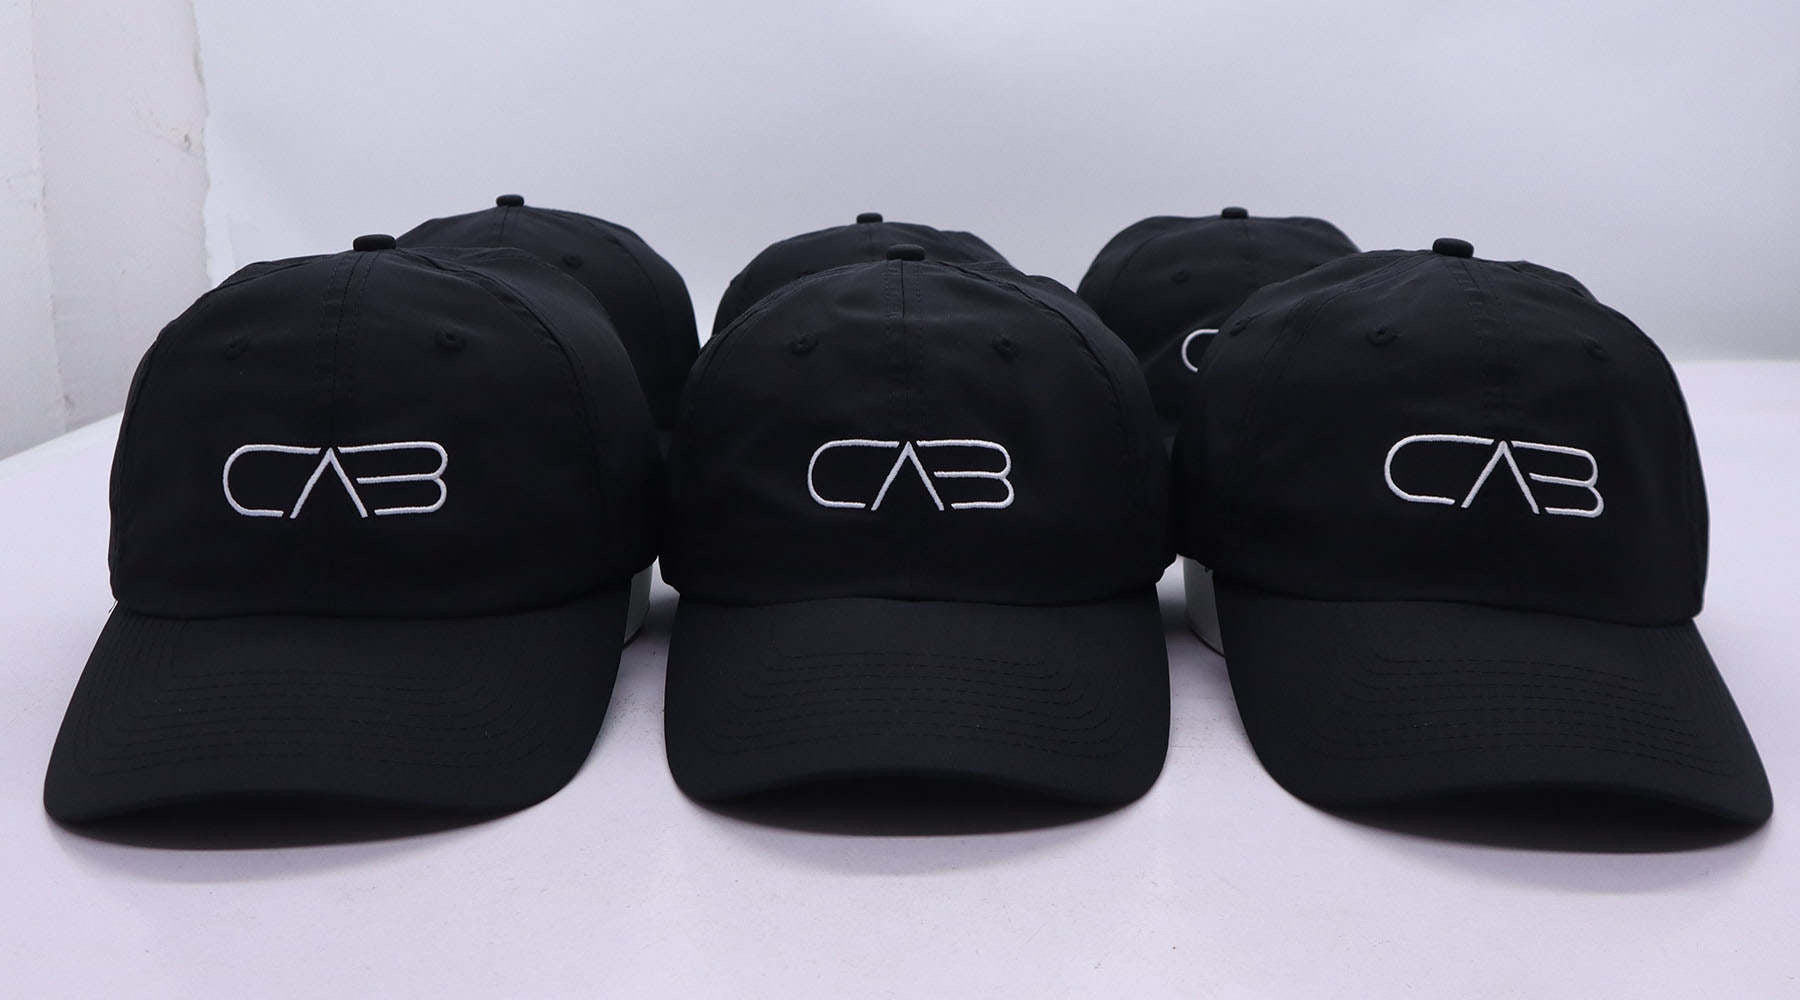 Cab Active Running Hat Black